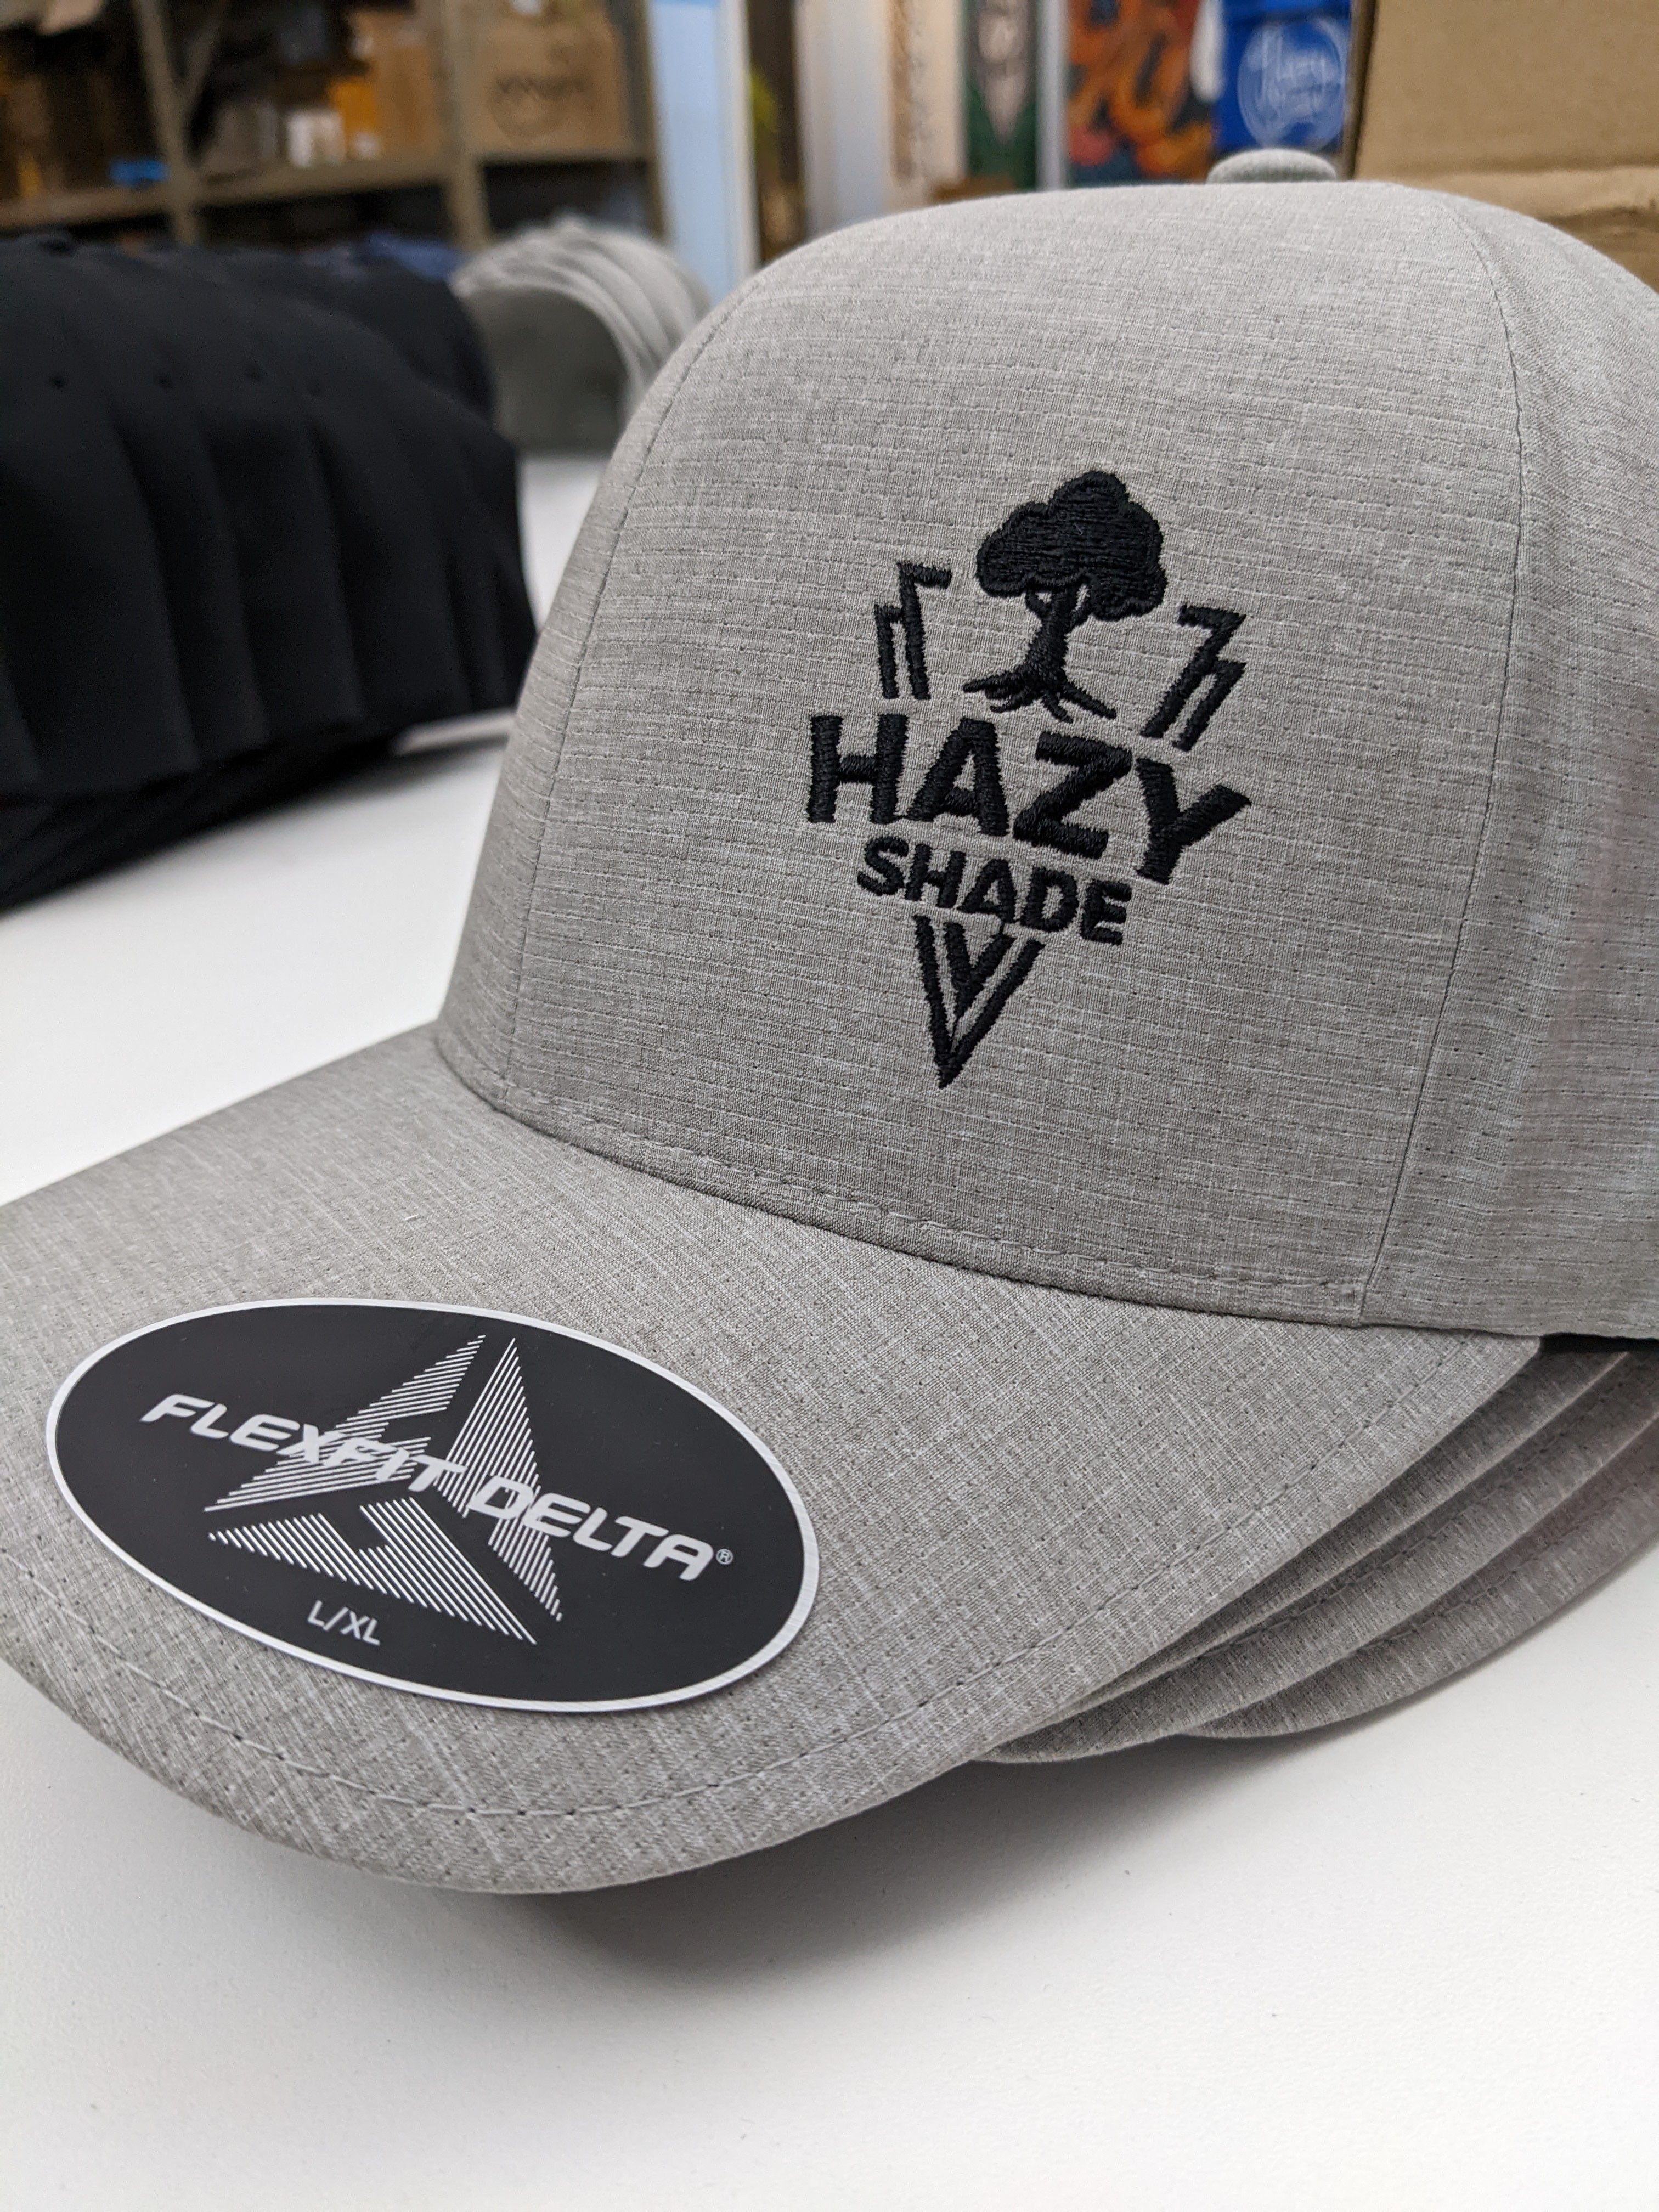 Hazy Shade Flexfit Delta Hat Triangle Melange Silver